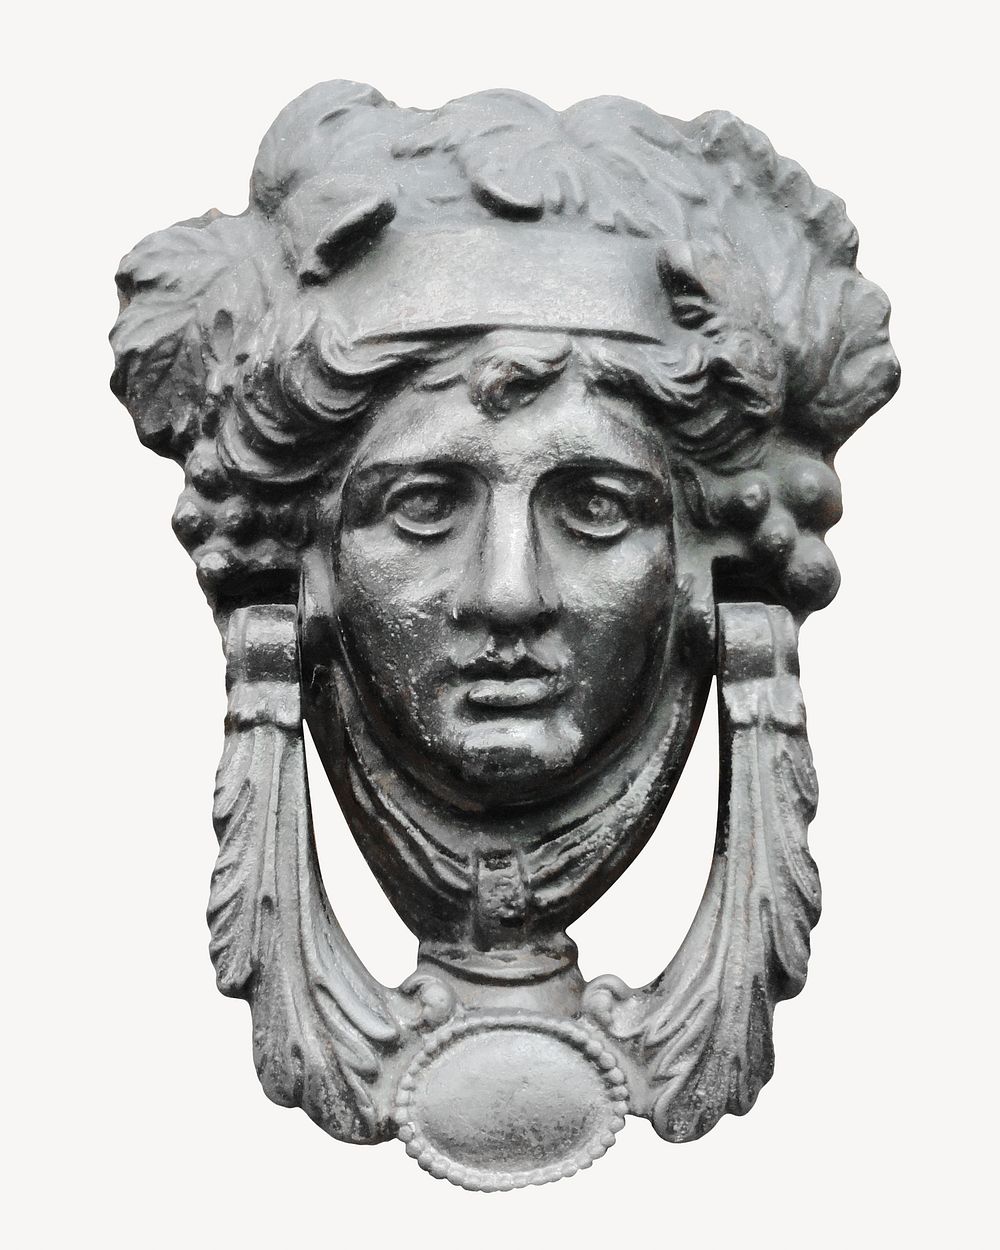 Athena door knocker, isolated image